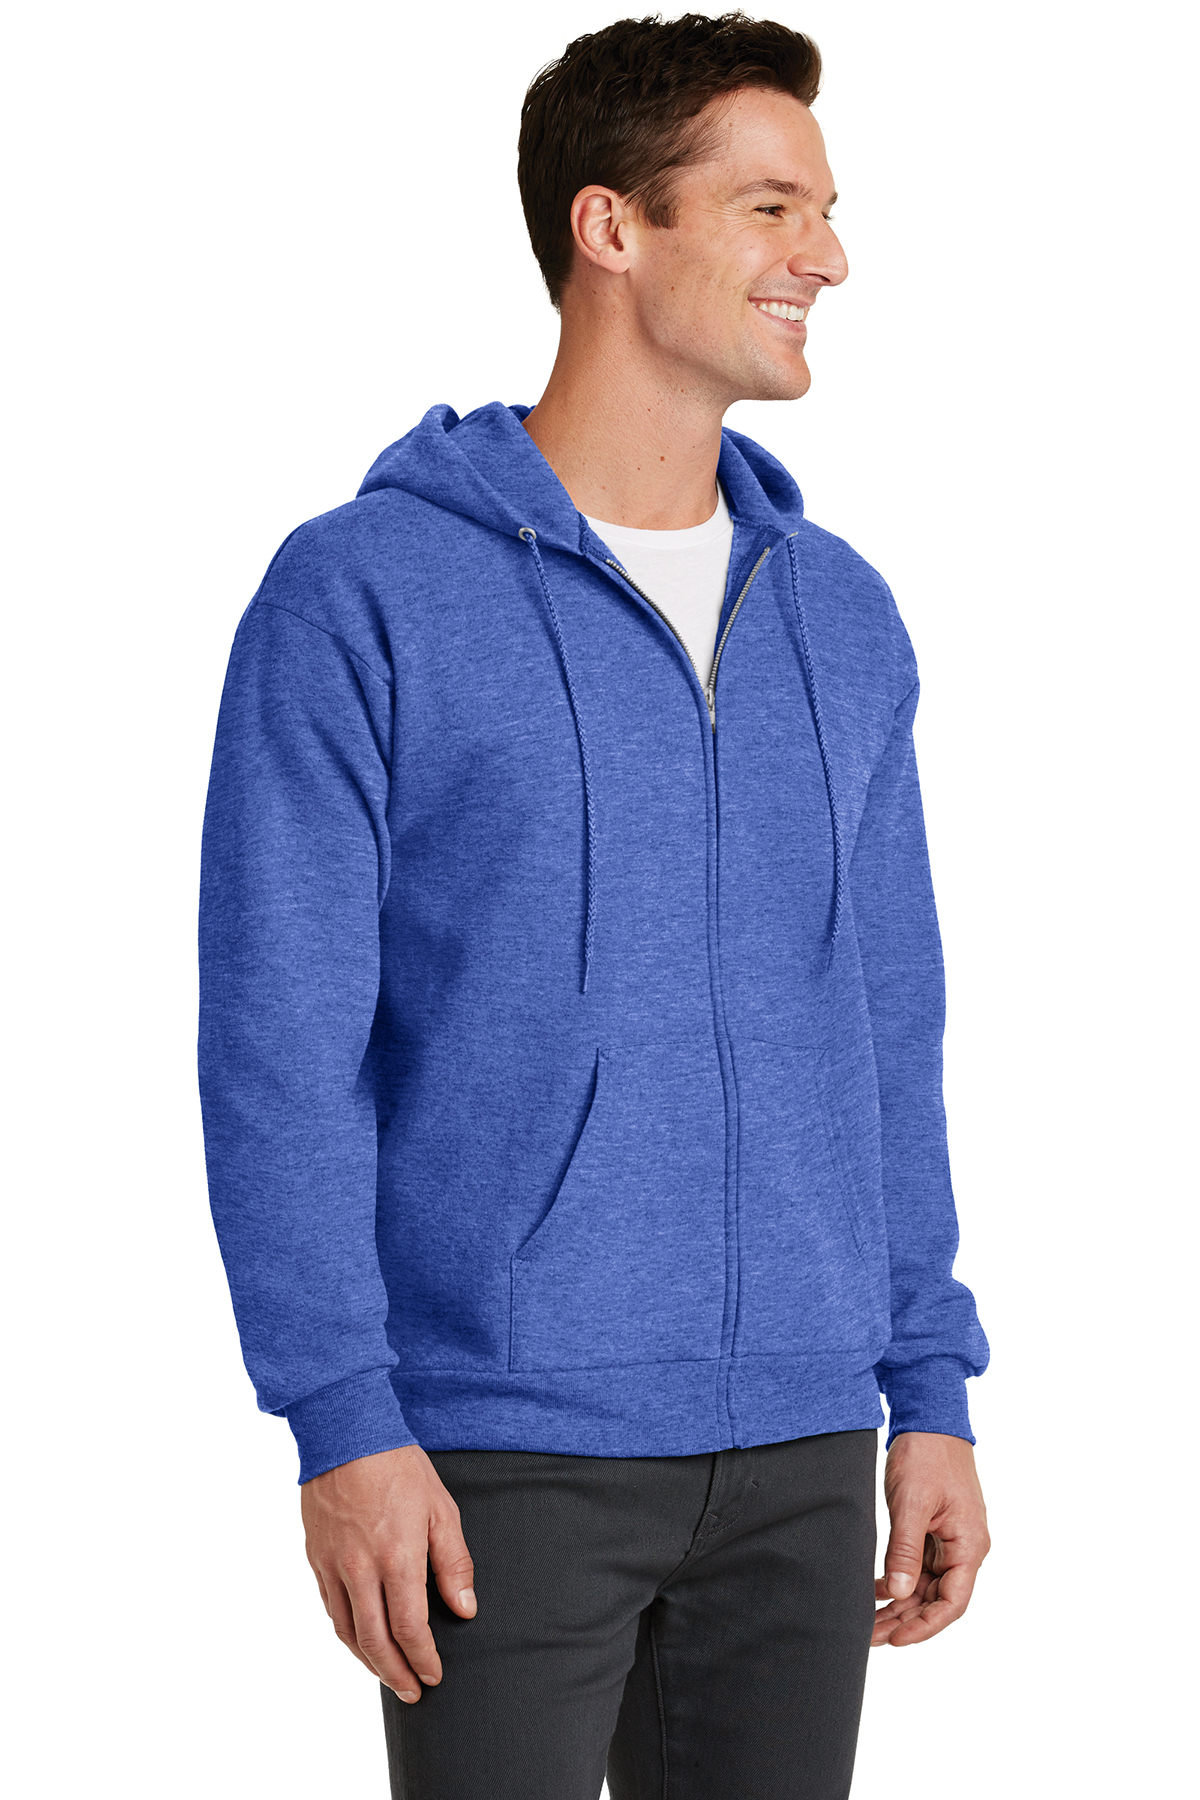 Port & Company® Core Fleece Full-Zip Hooded Sweatshirt | Port & Company ...